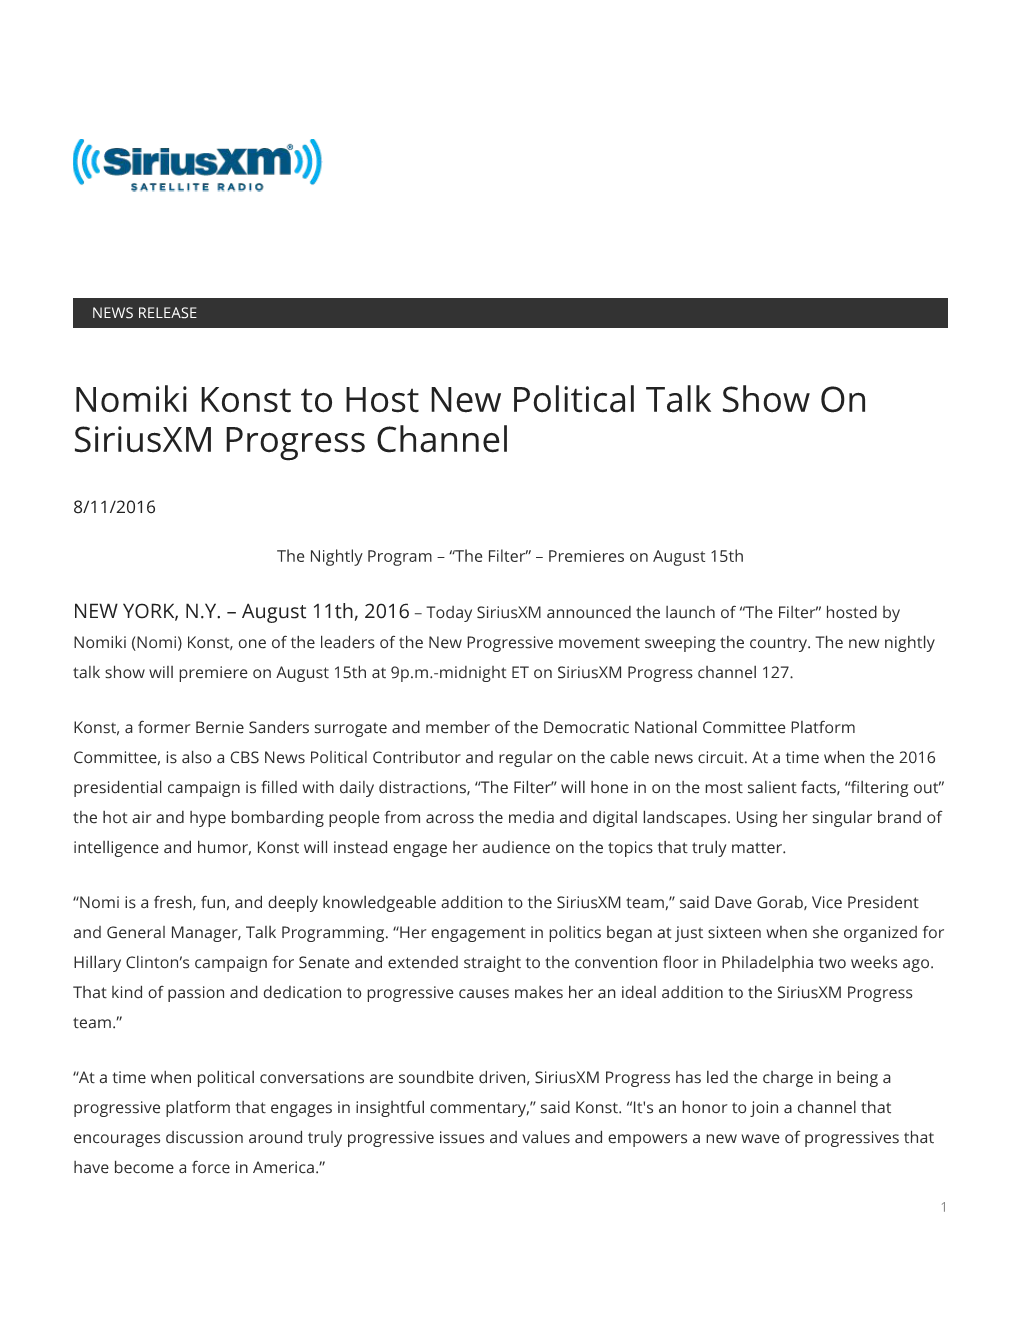 Nomiki Konst to Host New Political Talk Show on Siriusxm Progress Channel